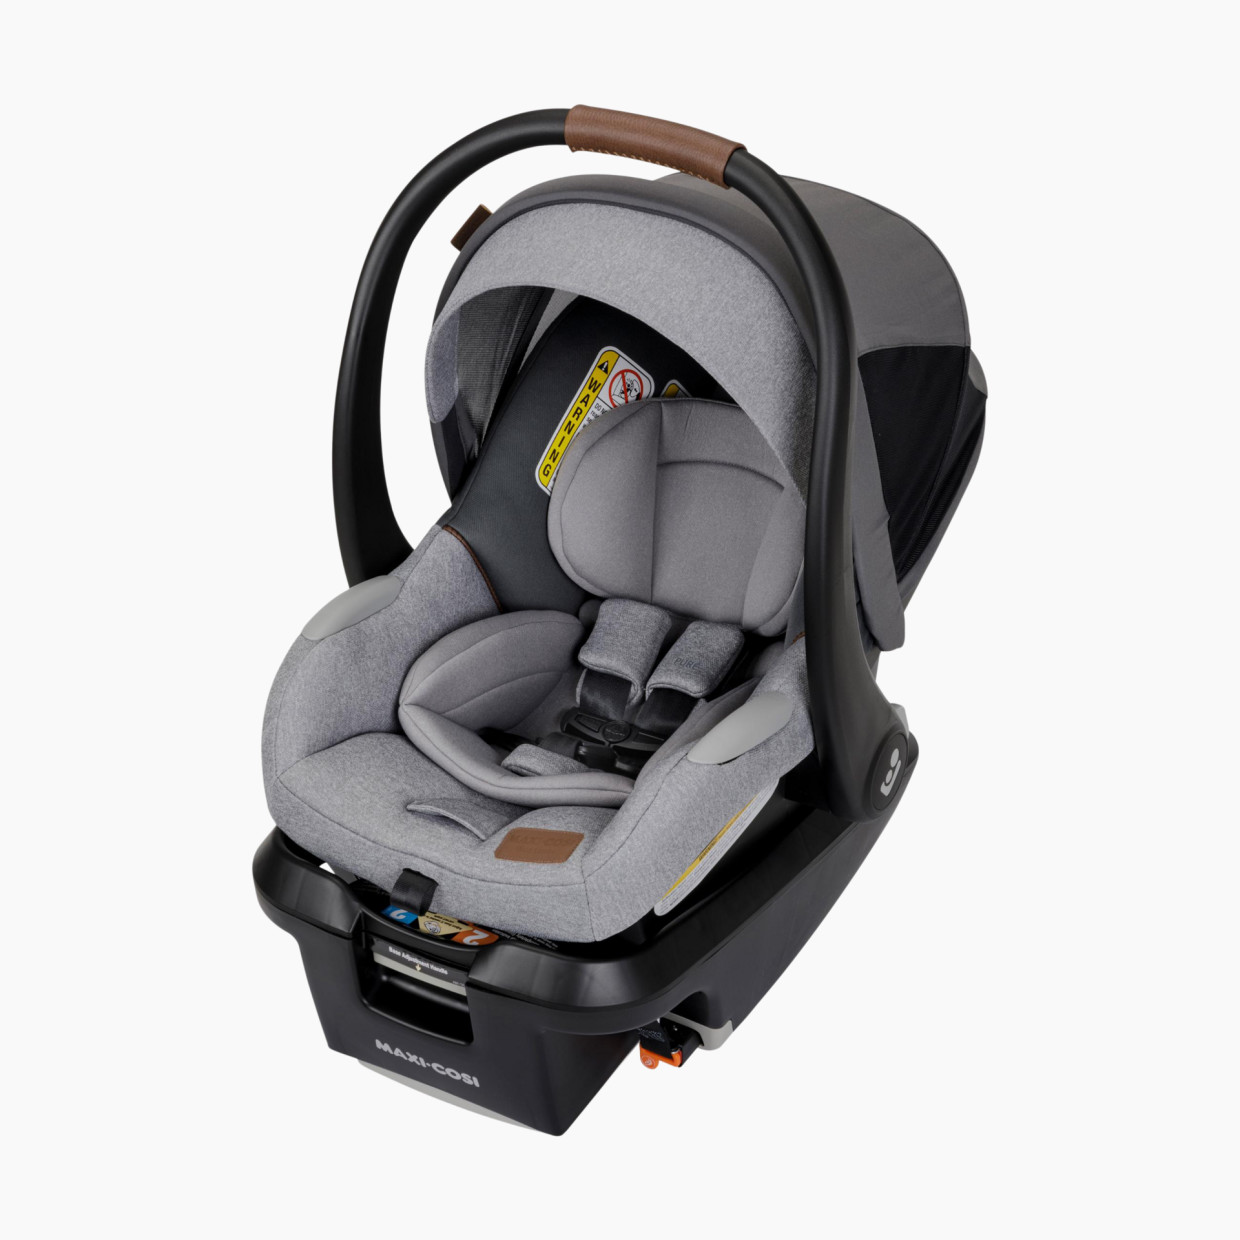 Maxi-Cosi Mico Luxe+ Infant Car Seat - Urban Wonder.